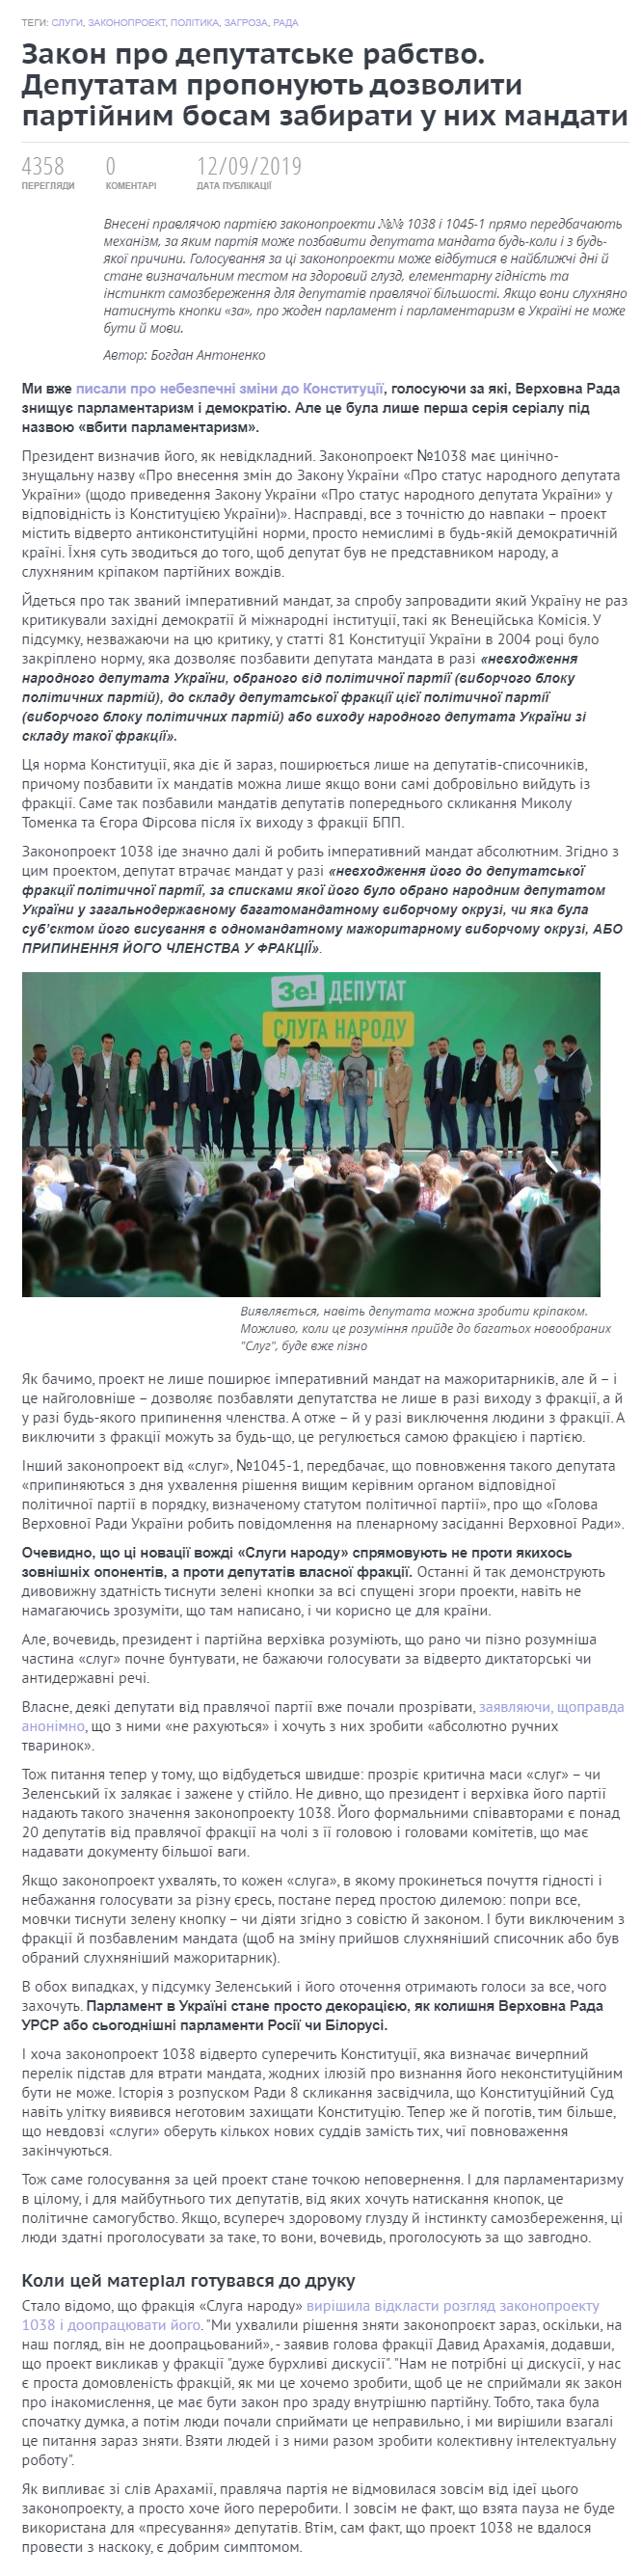 http://texty.org.ua/pg/article/editorial/read/96414/Zakon_pro_deputatske_rabstvo_Deputatam_proponujut_dozvolyty?a_srt=2